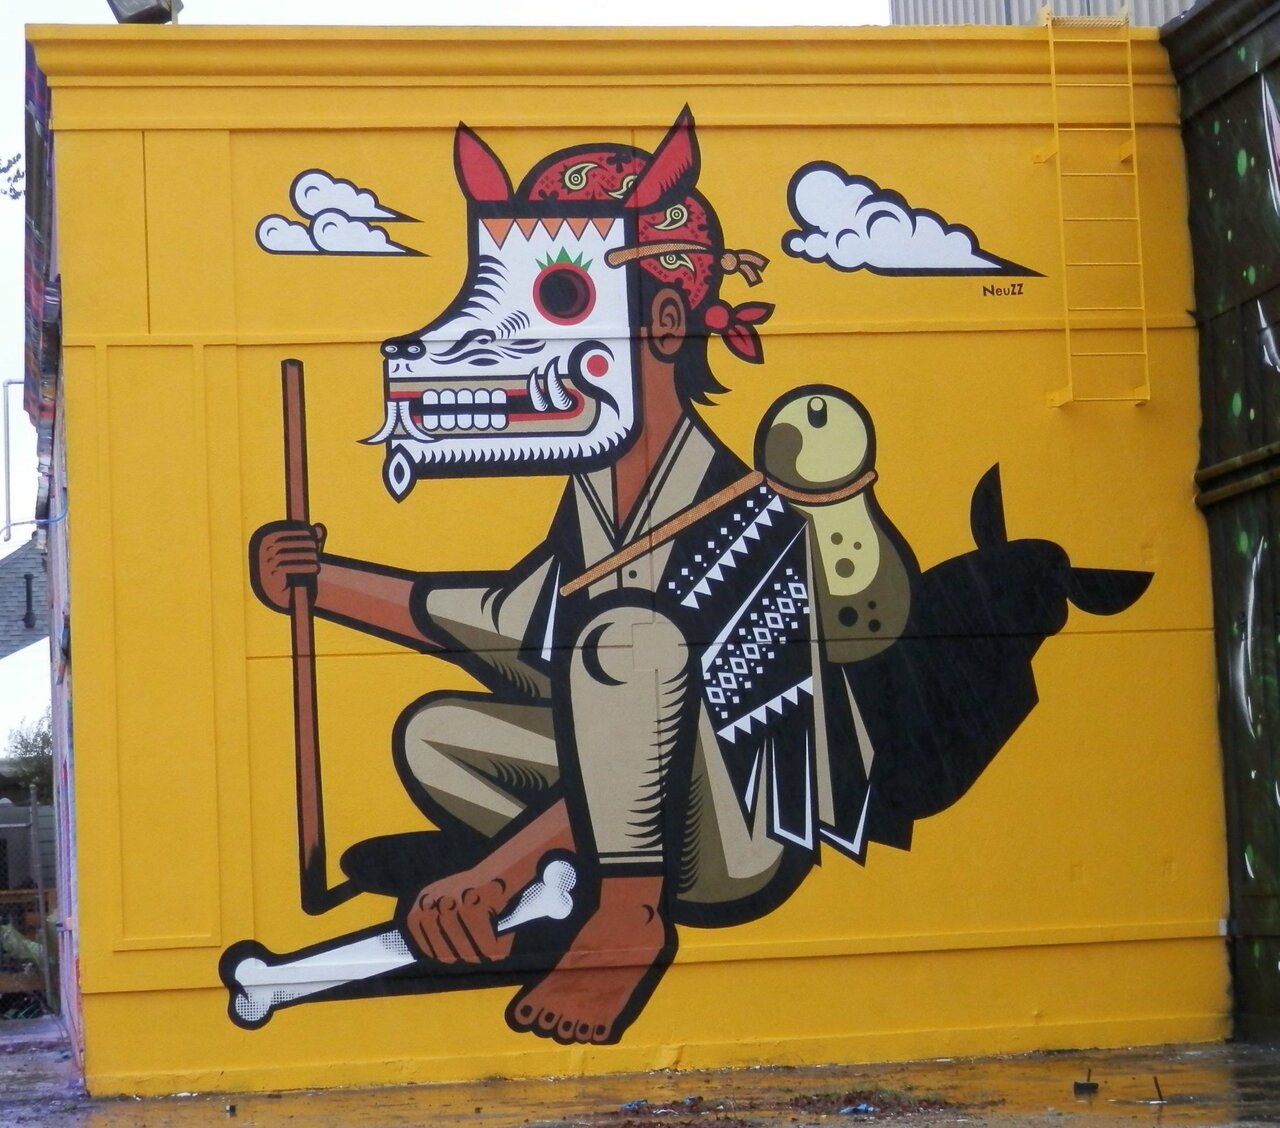 RT @JohnRMoffitt: #Houston #Graffiti #HueFestival #Streetart by NeuZZ (aka Miguel Mejia) from Mexico. https://t.co/SLOTNxbNCp